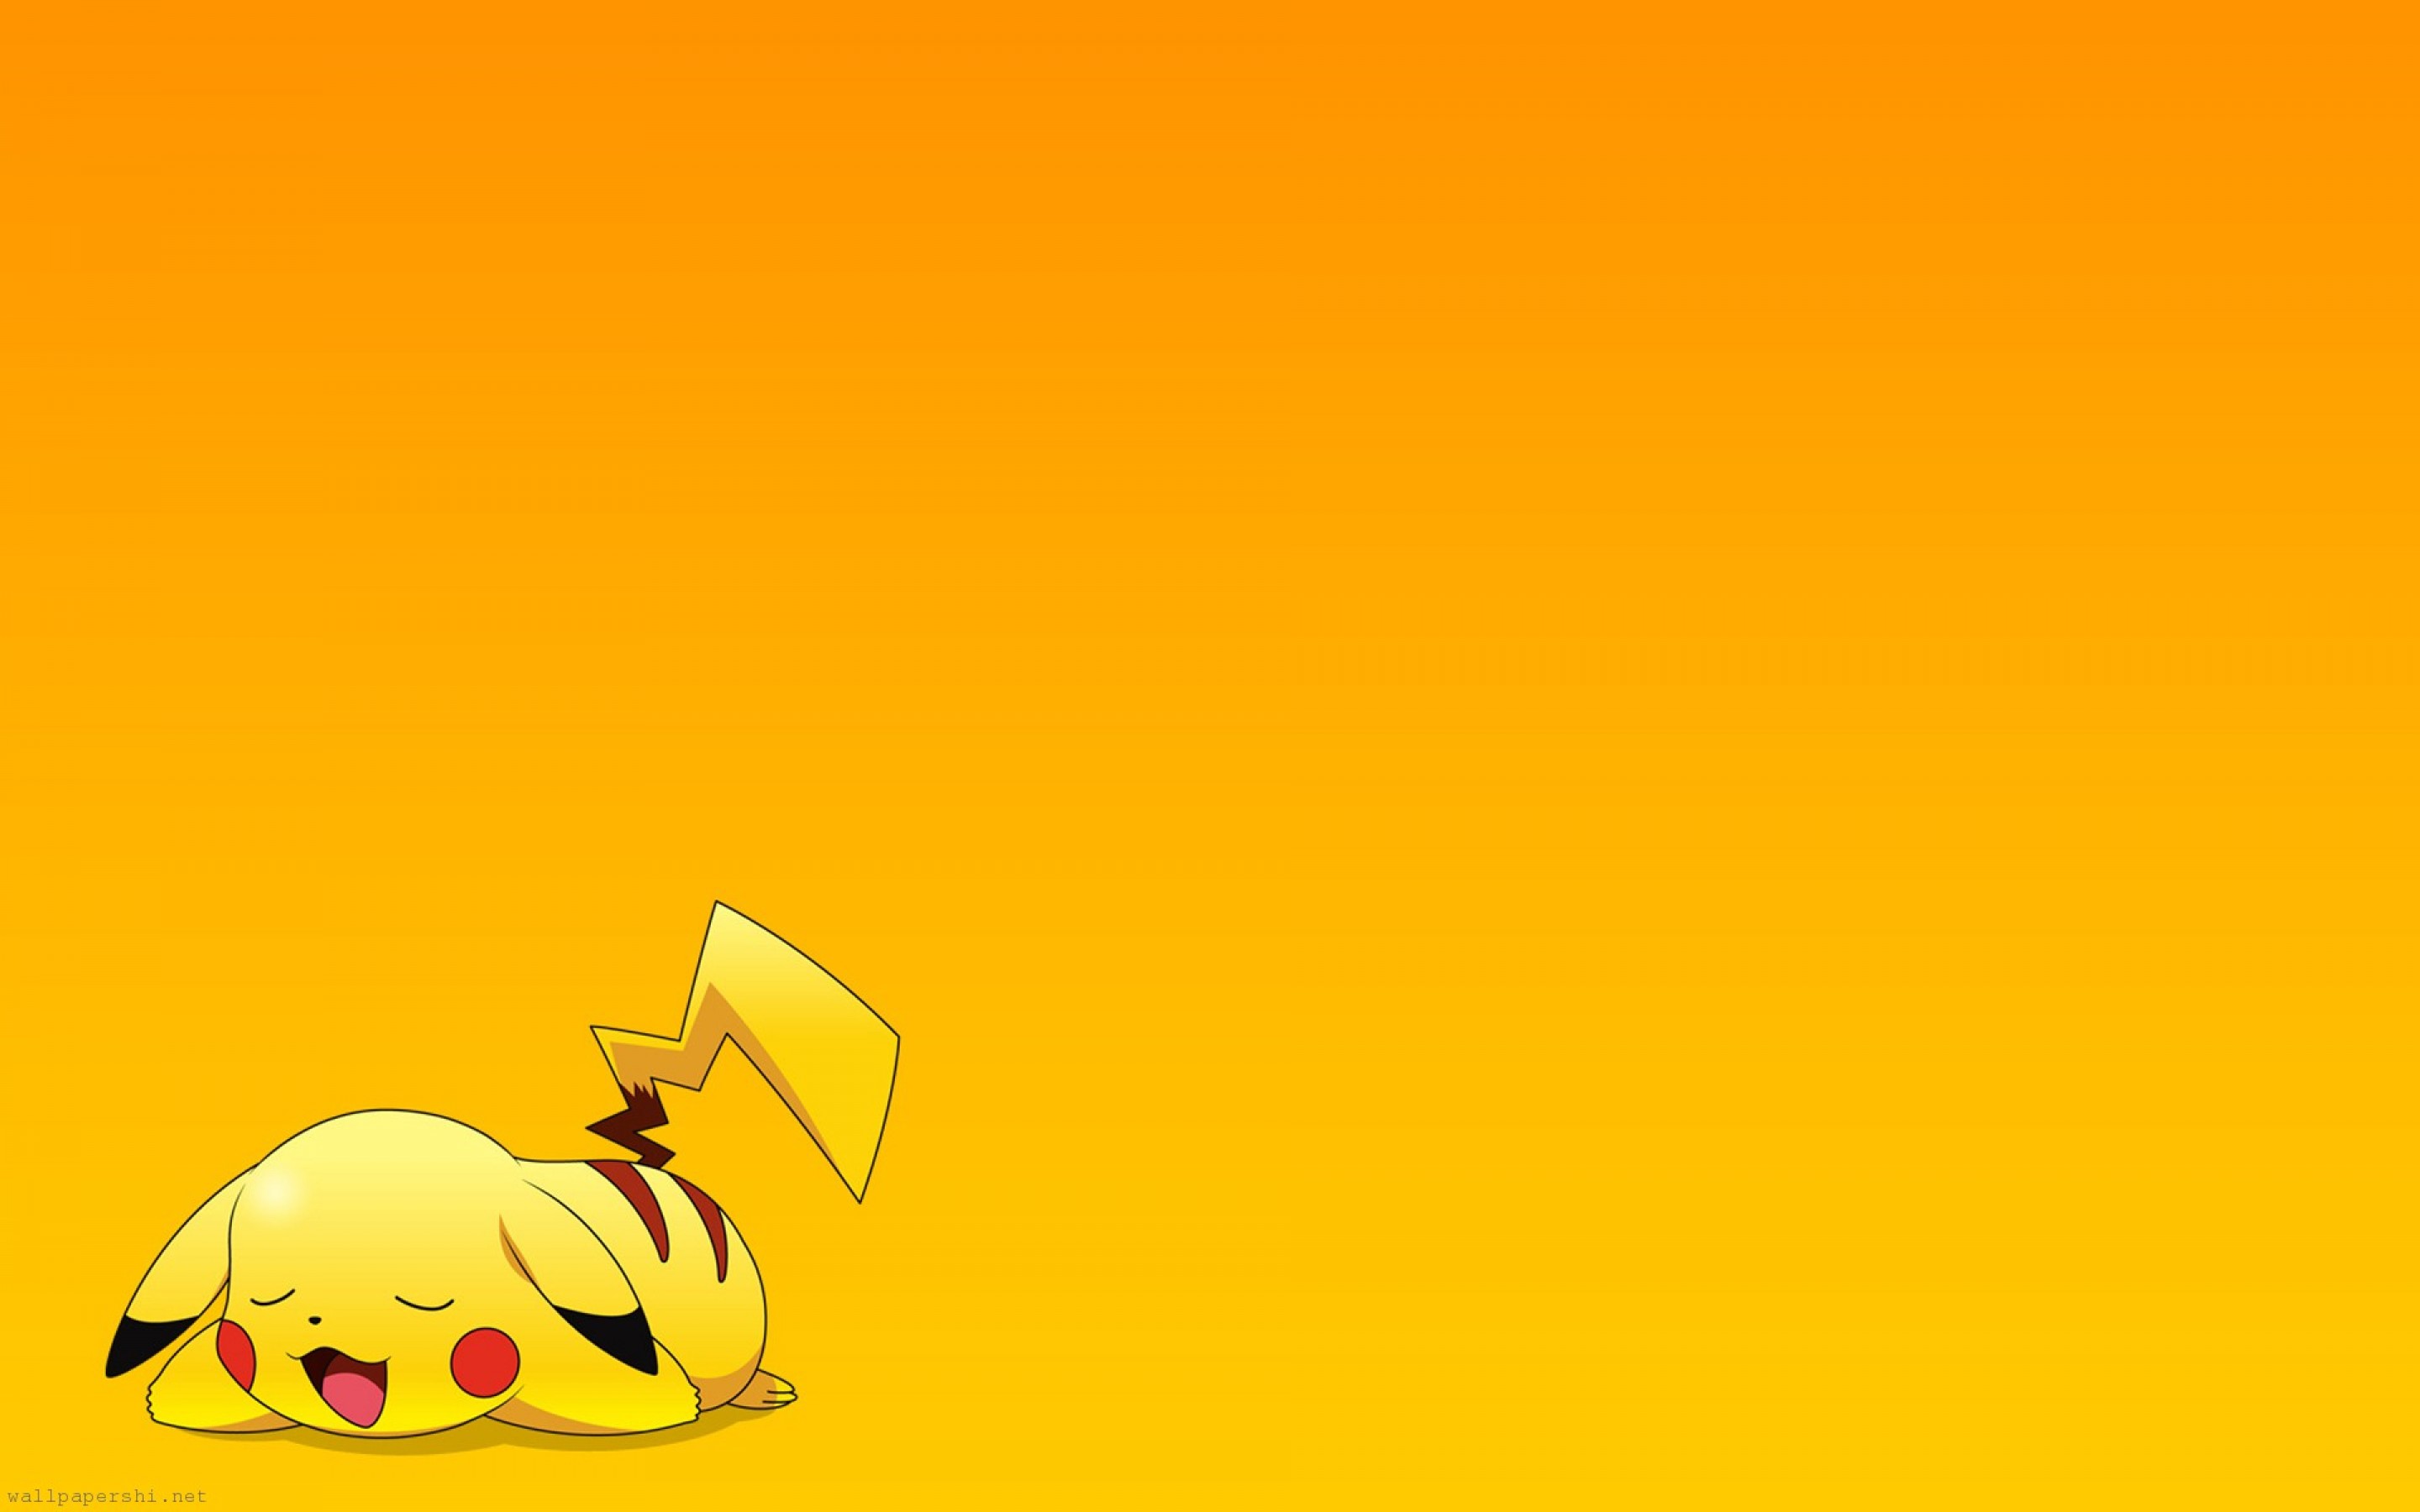 Download Pokemon Pikachu Wallpaper HD 2889 Full Size 2880x1800